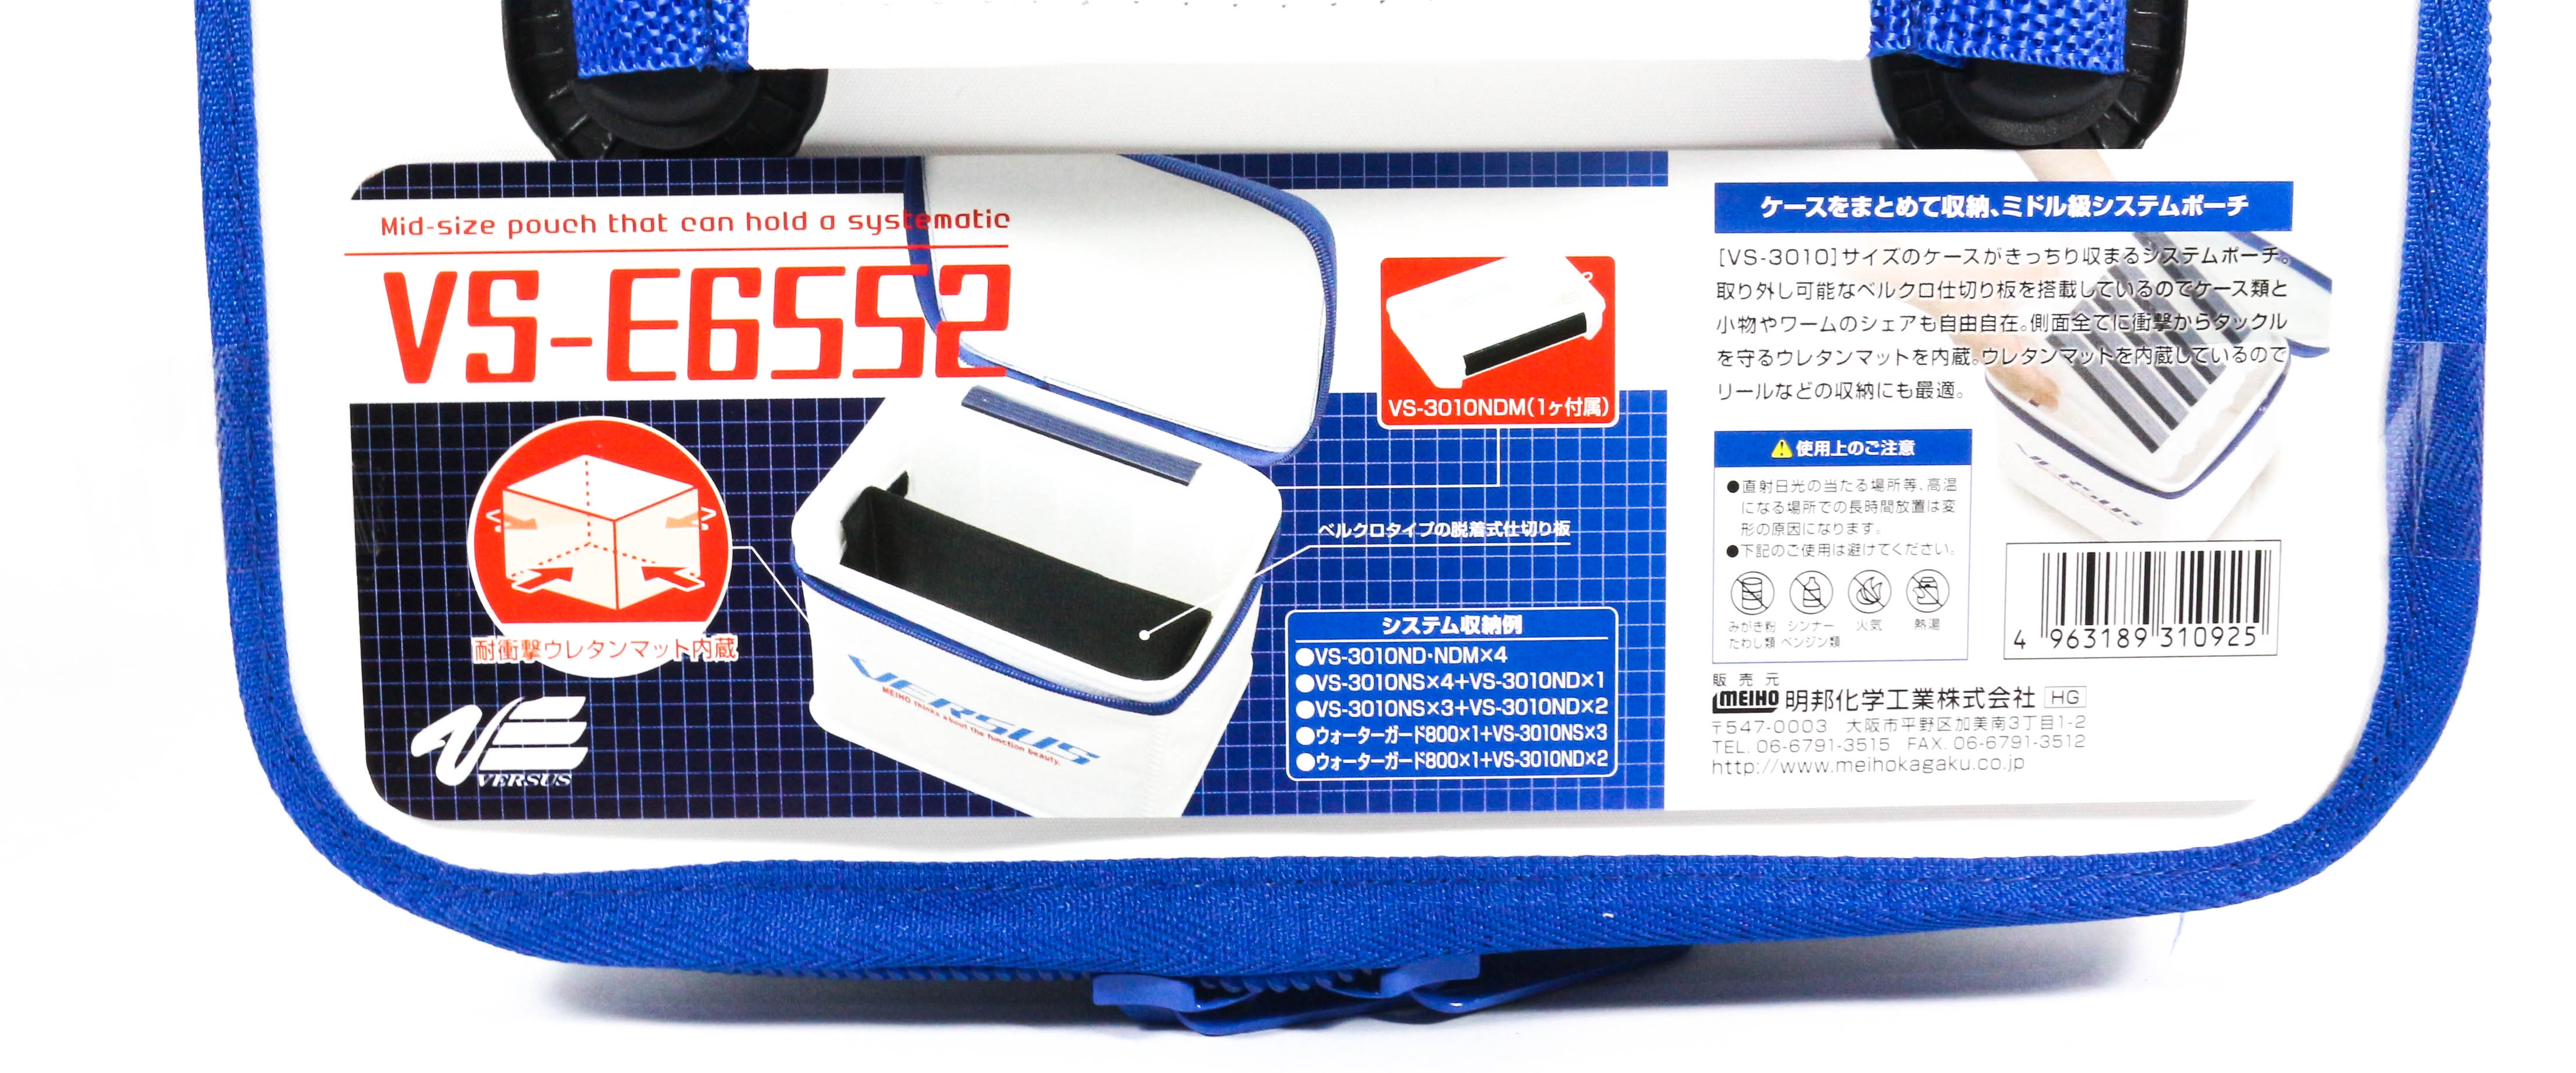 Cassetta da Pesca Meiho Versus VS-E6552